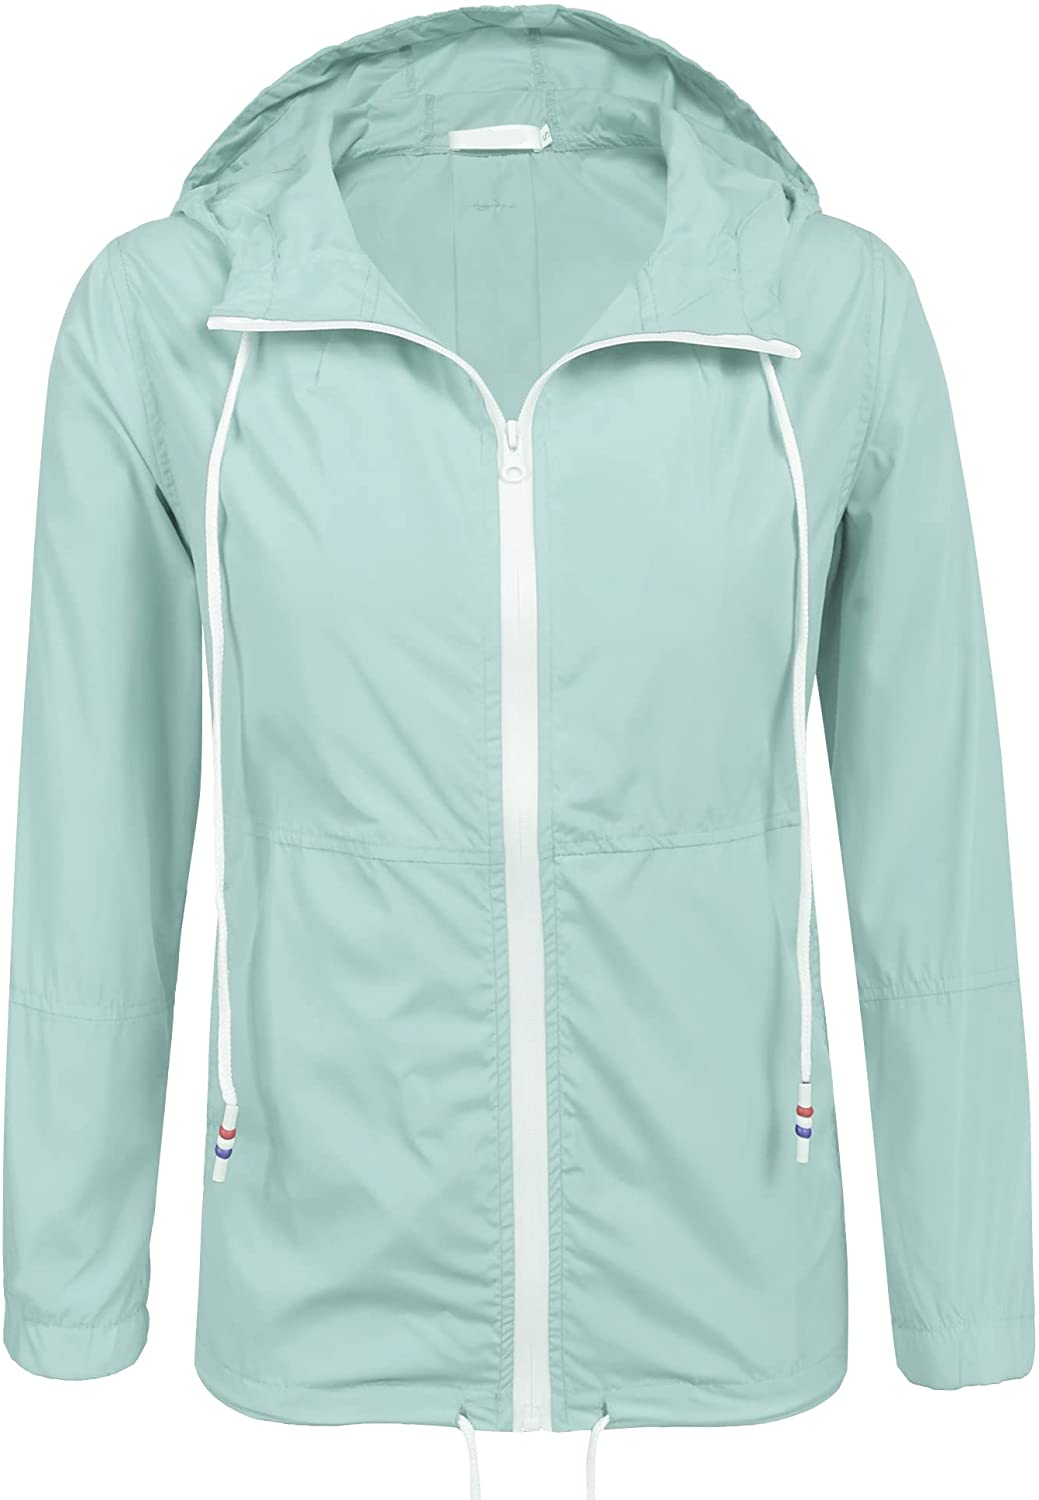 SoTeer Womens Waterproof Raincoat Outdoor Hooded Rain Jacket Windbreaker 15 Colors S-XXXL